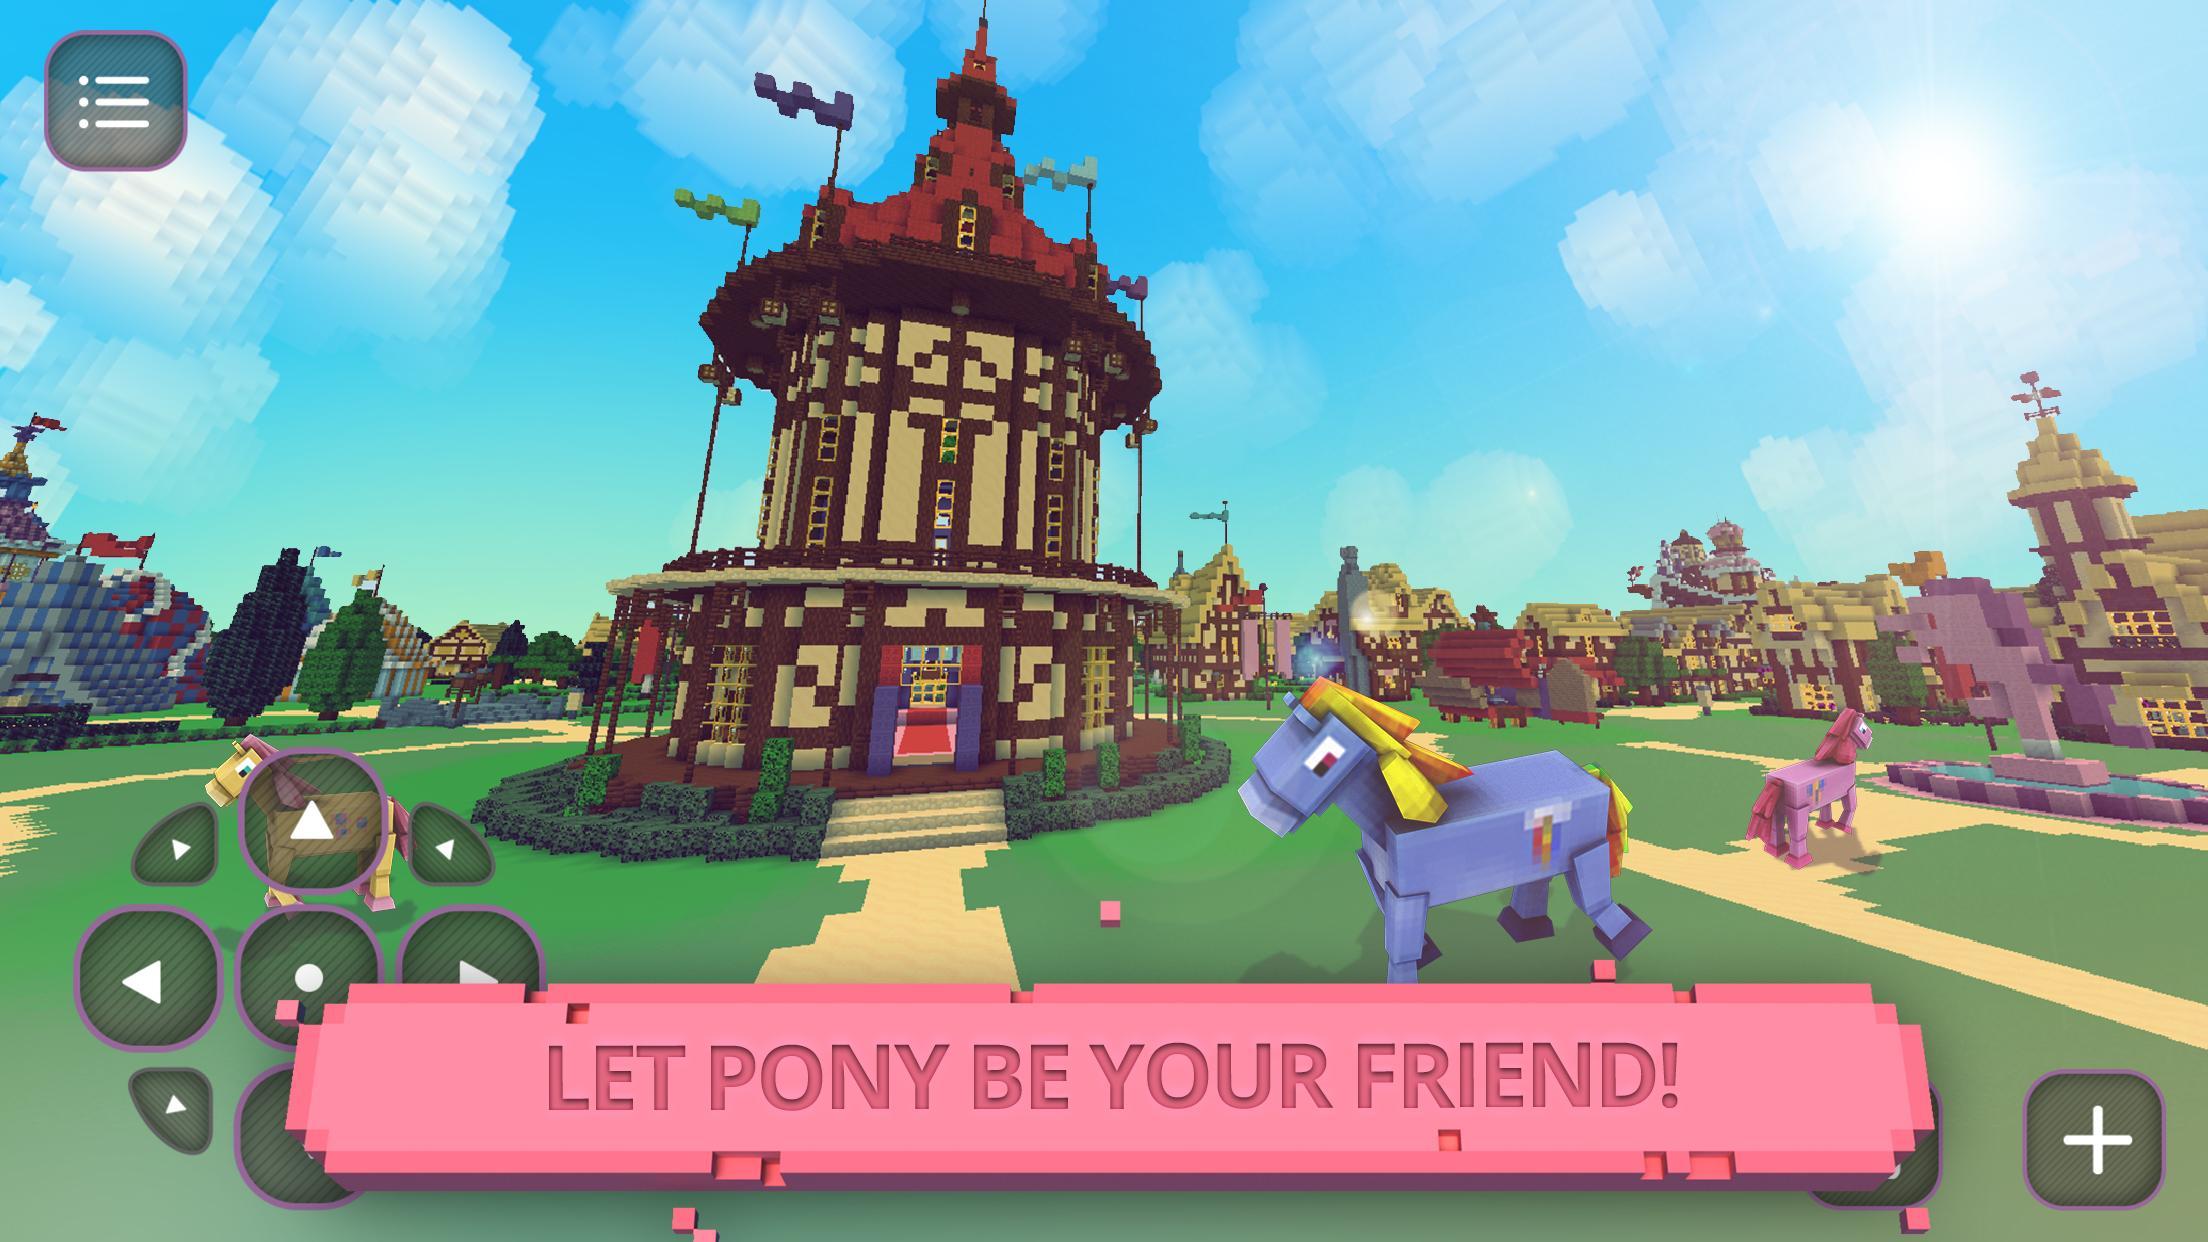 Screenshot 1 of Pony Girls Craft: Thám hiểm 1.32